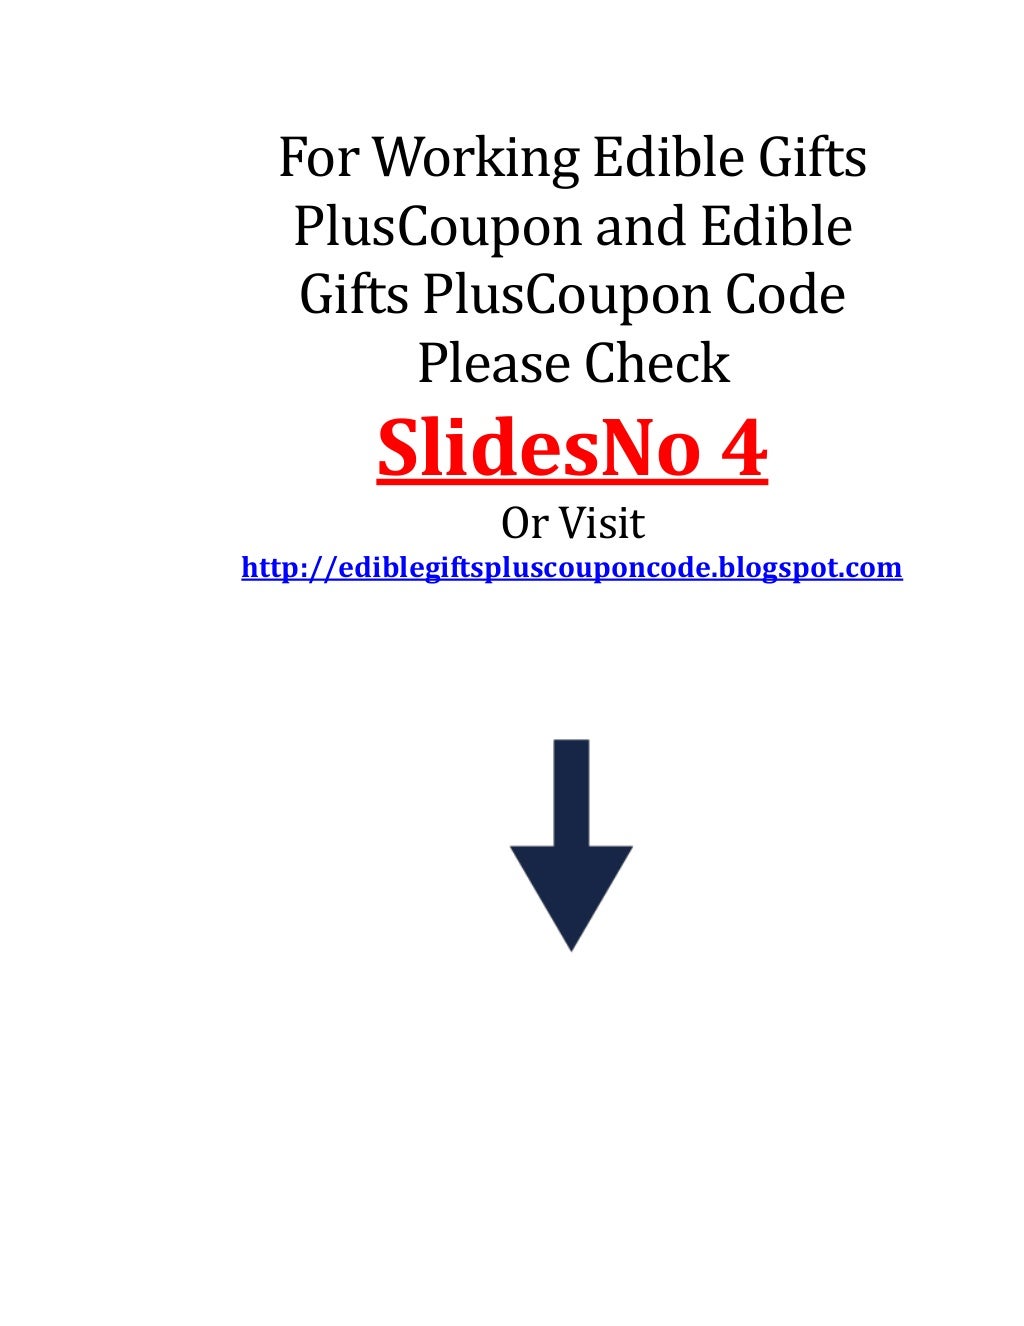 Edible gifts plus coupon code